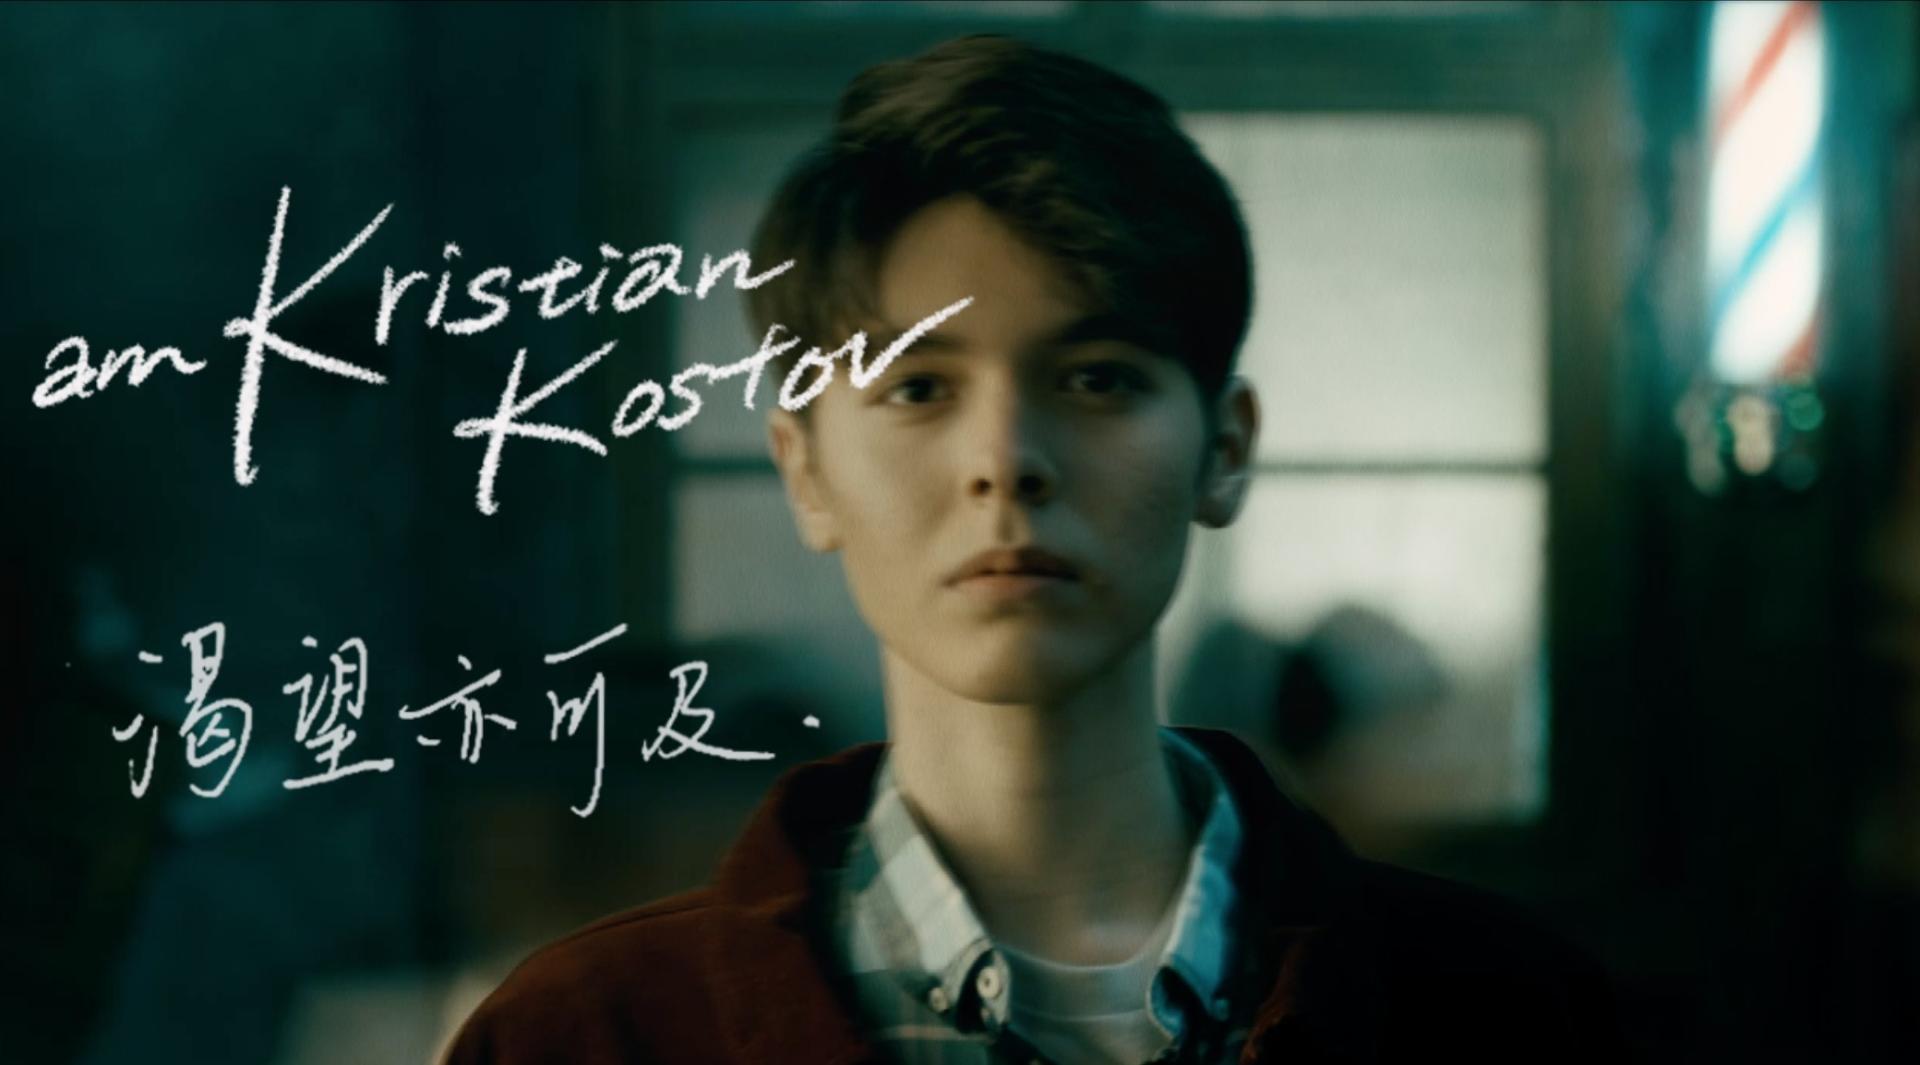 歌手 Kristian Kostov宣传片